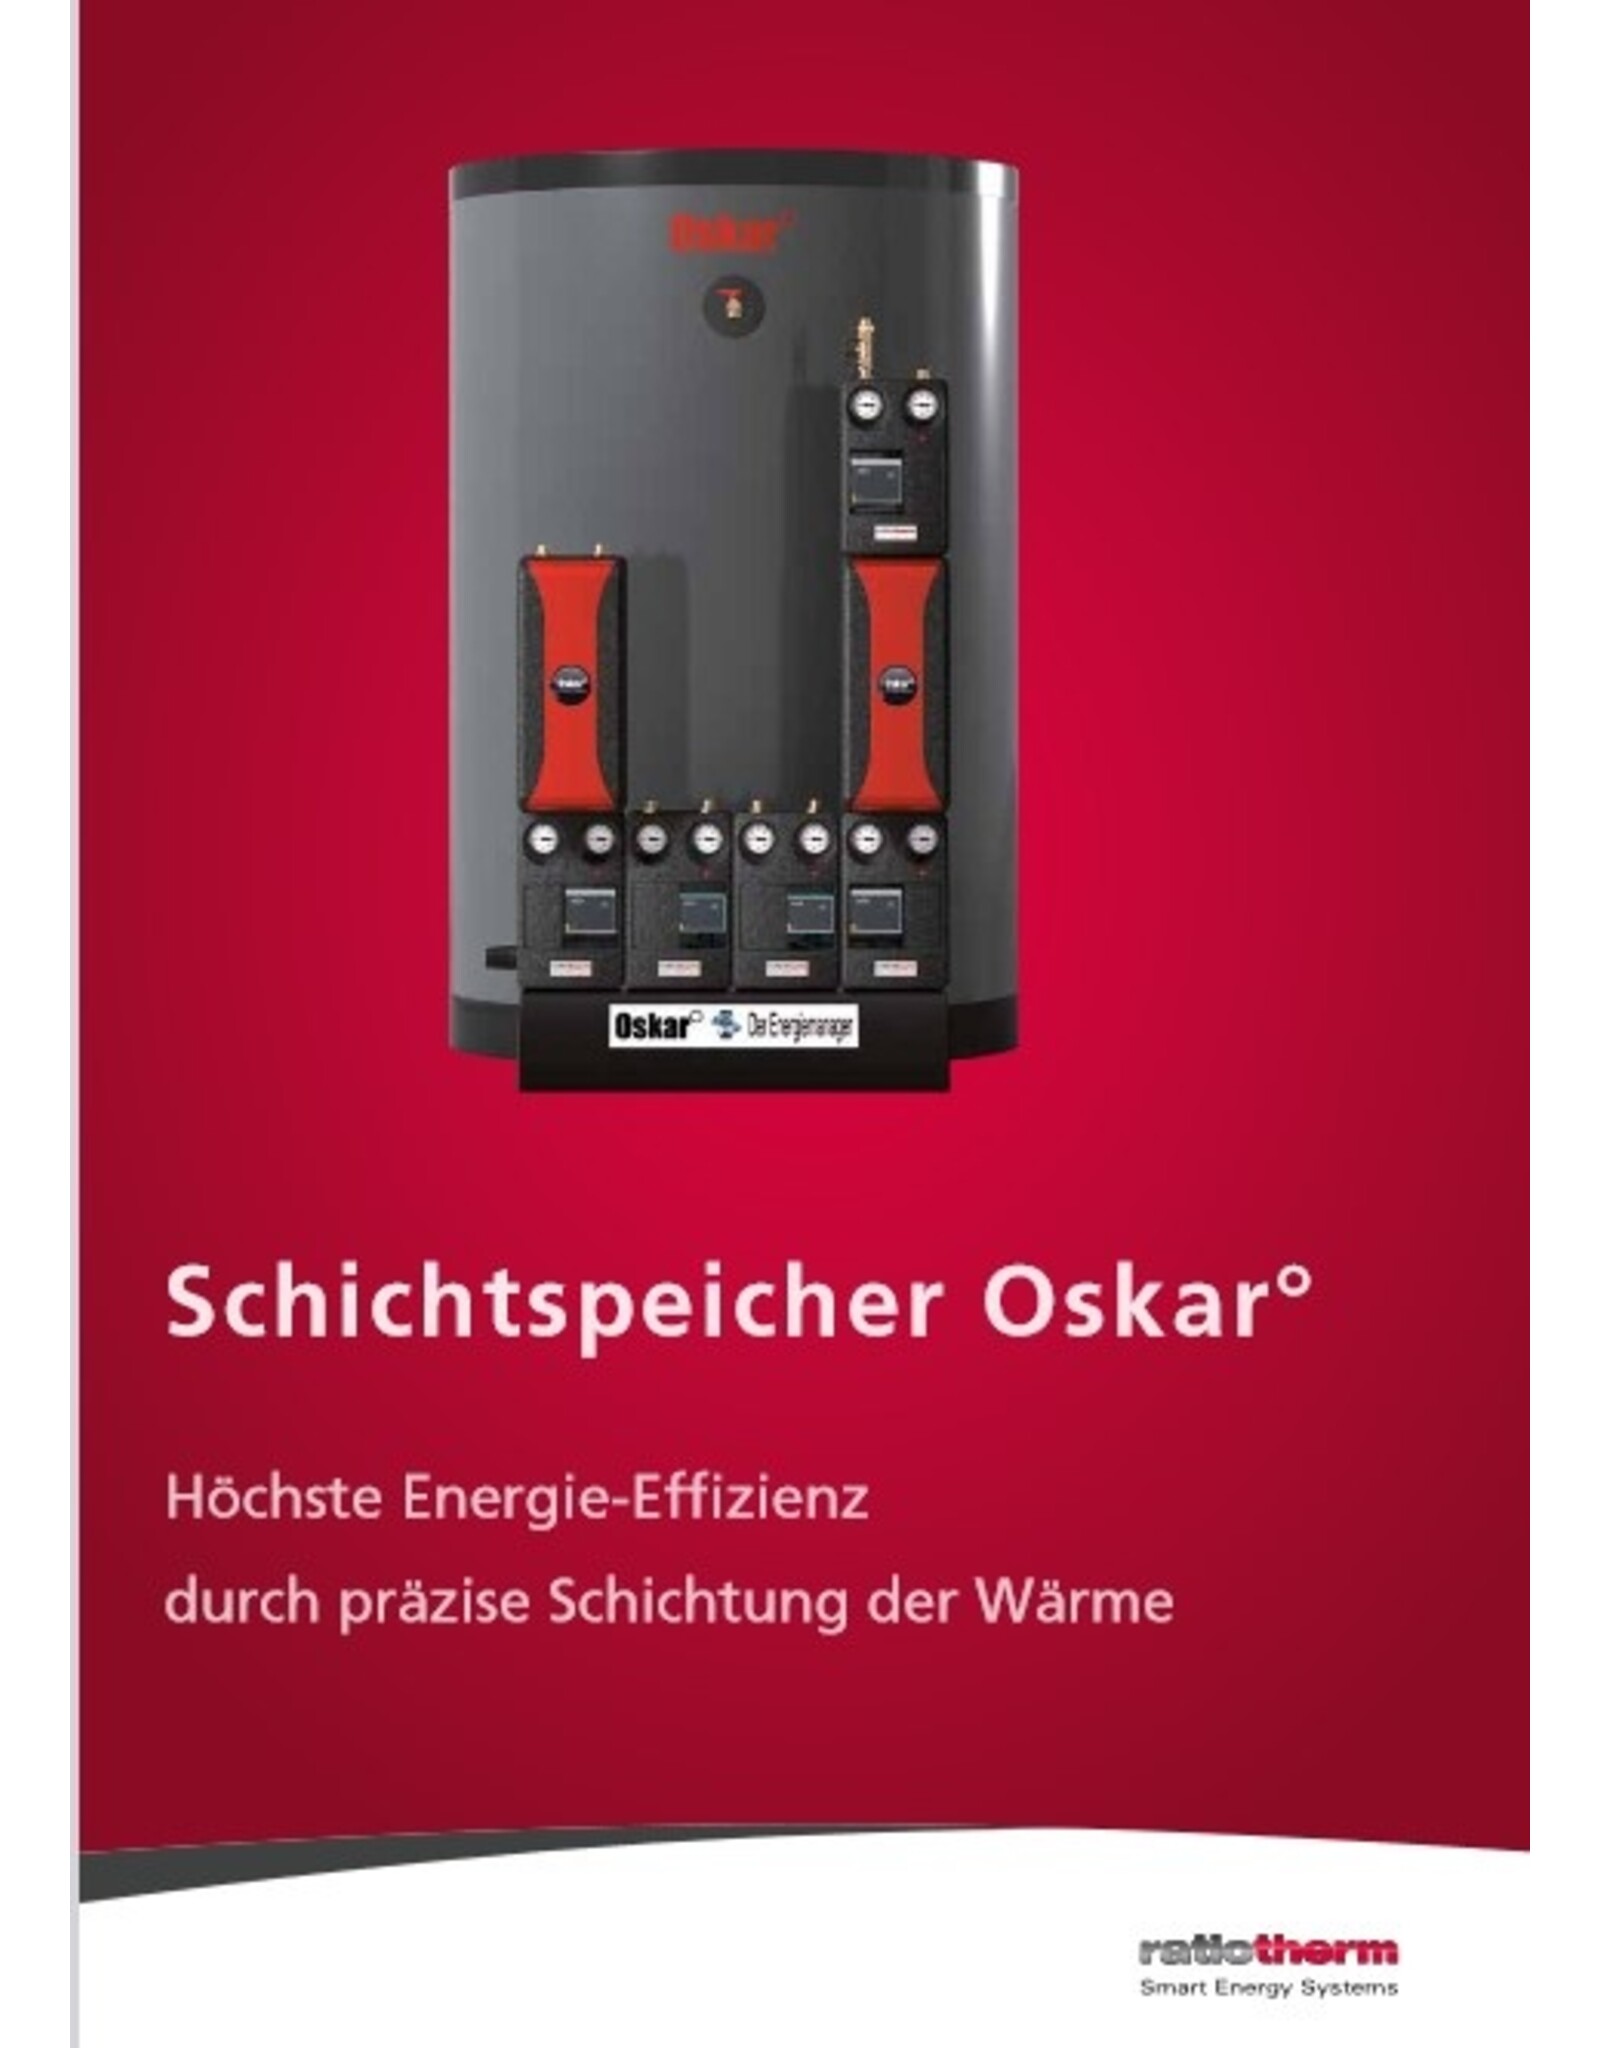 ratiotherm Flyer - Oskar-10 für Partnerbetriebe kostenfrei